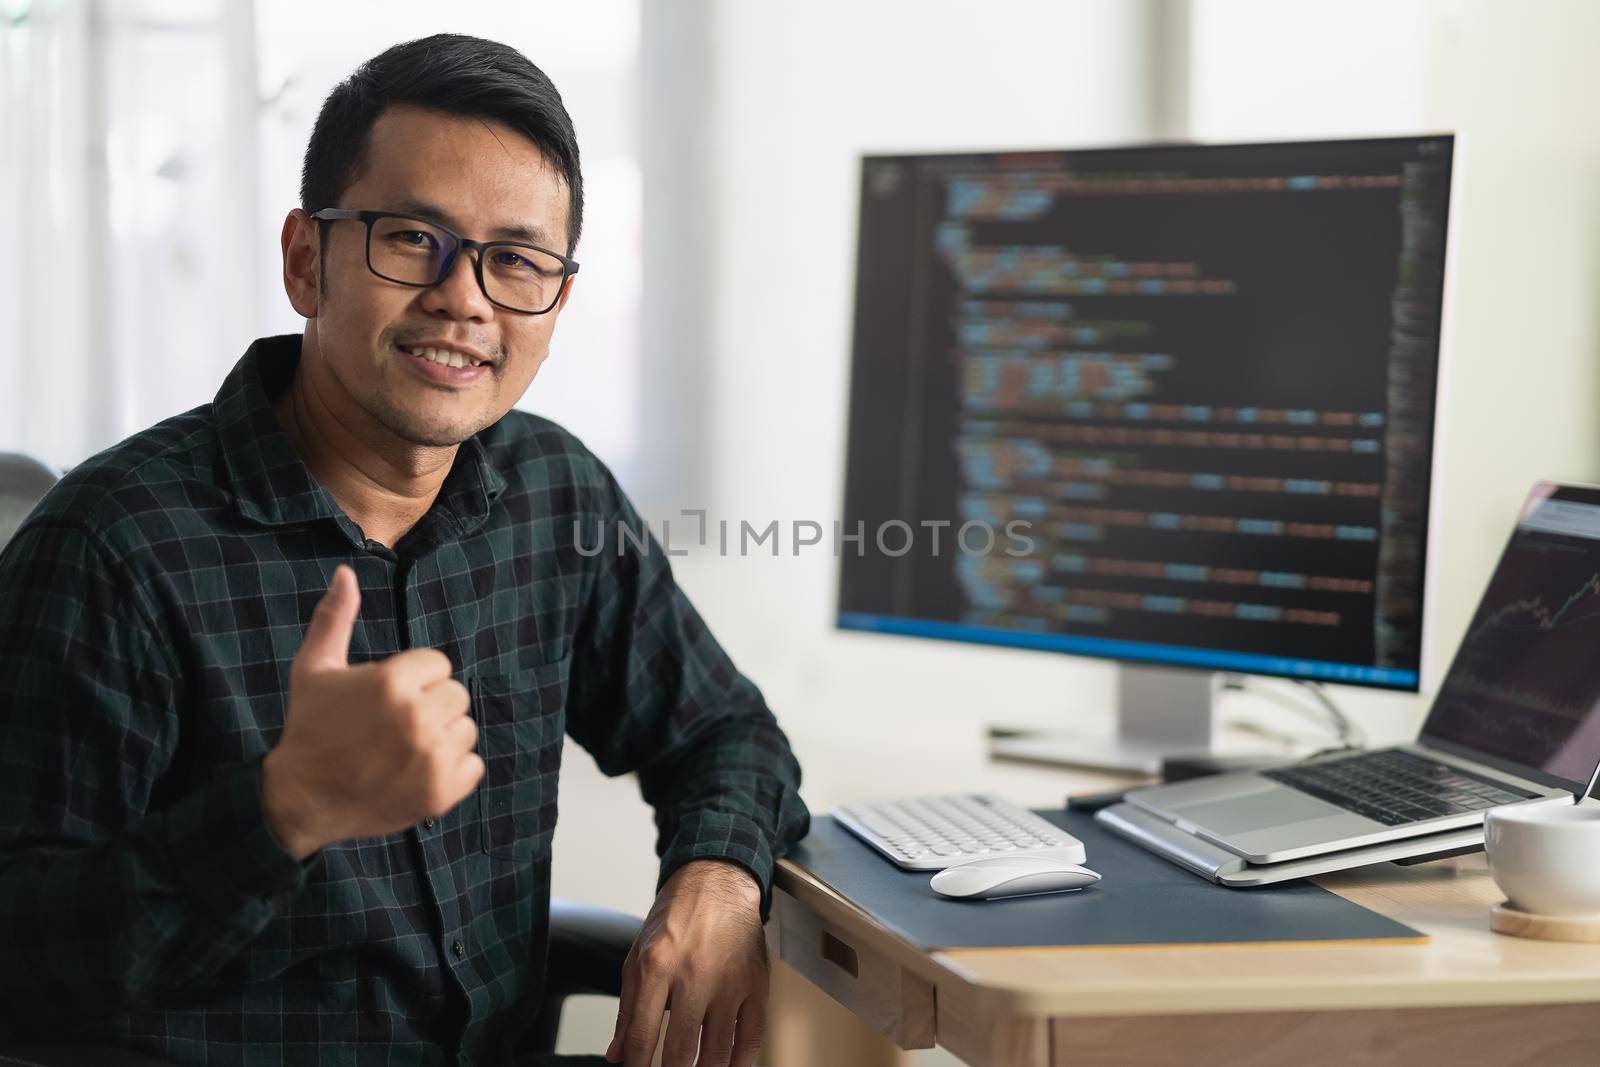 software develper working on laptop at home office. Programmer working develop web application. Software programming concept by Wmpix